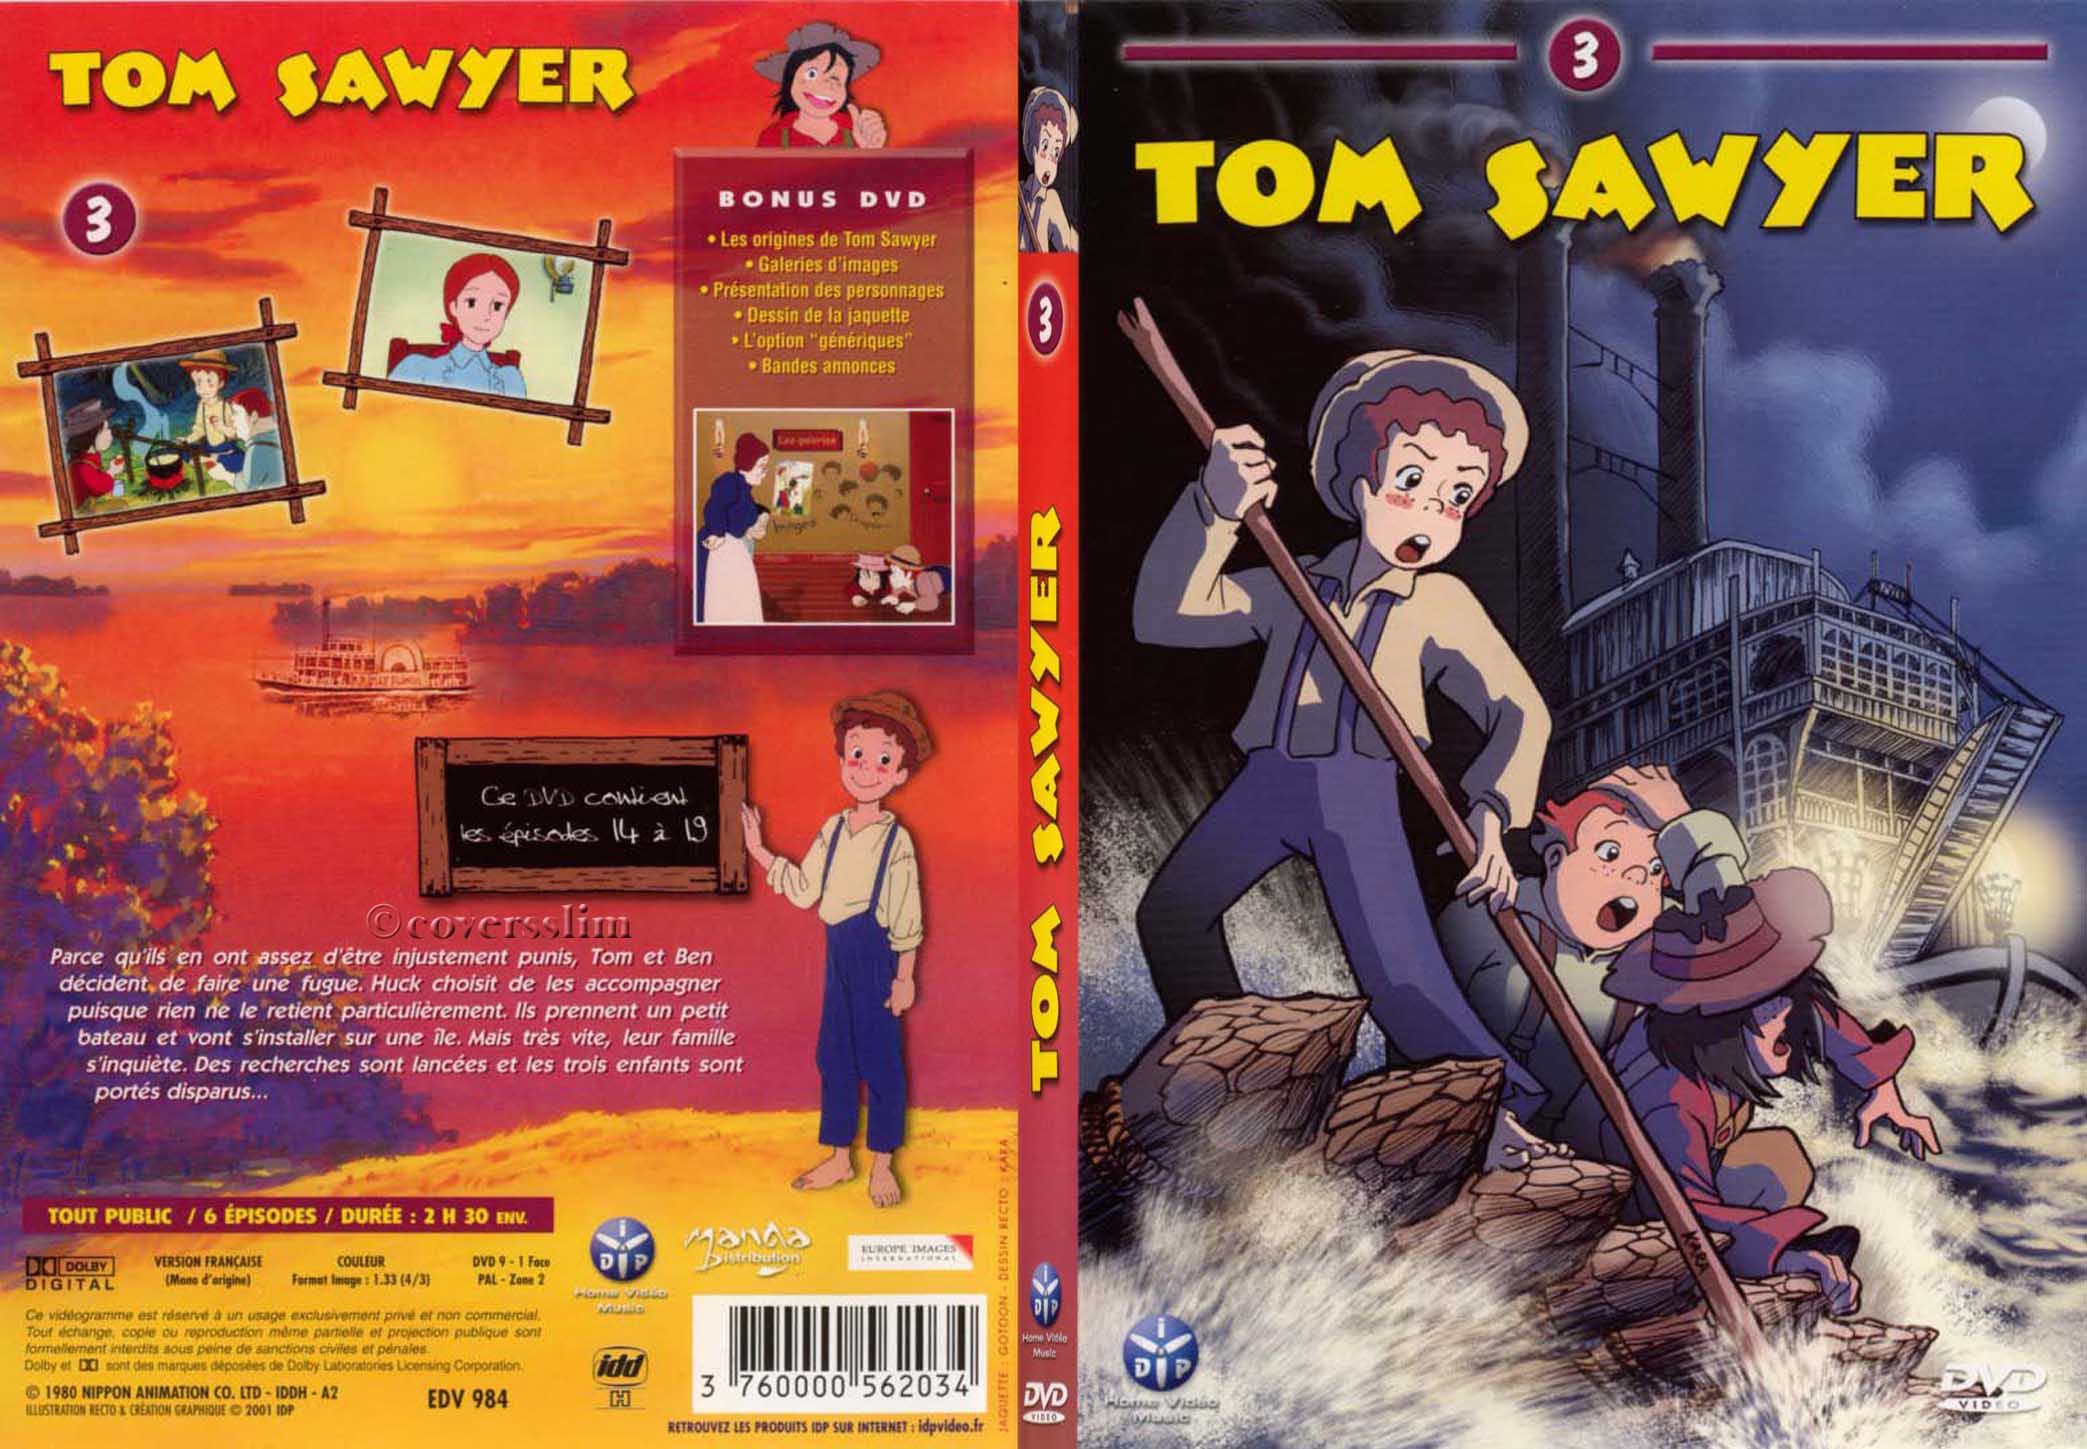 Jaquette DVD Tom Sawyer vol 3 - SLIM v2